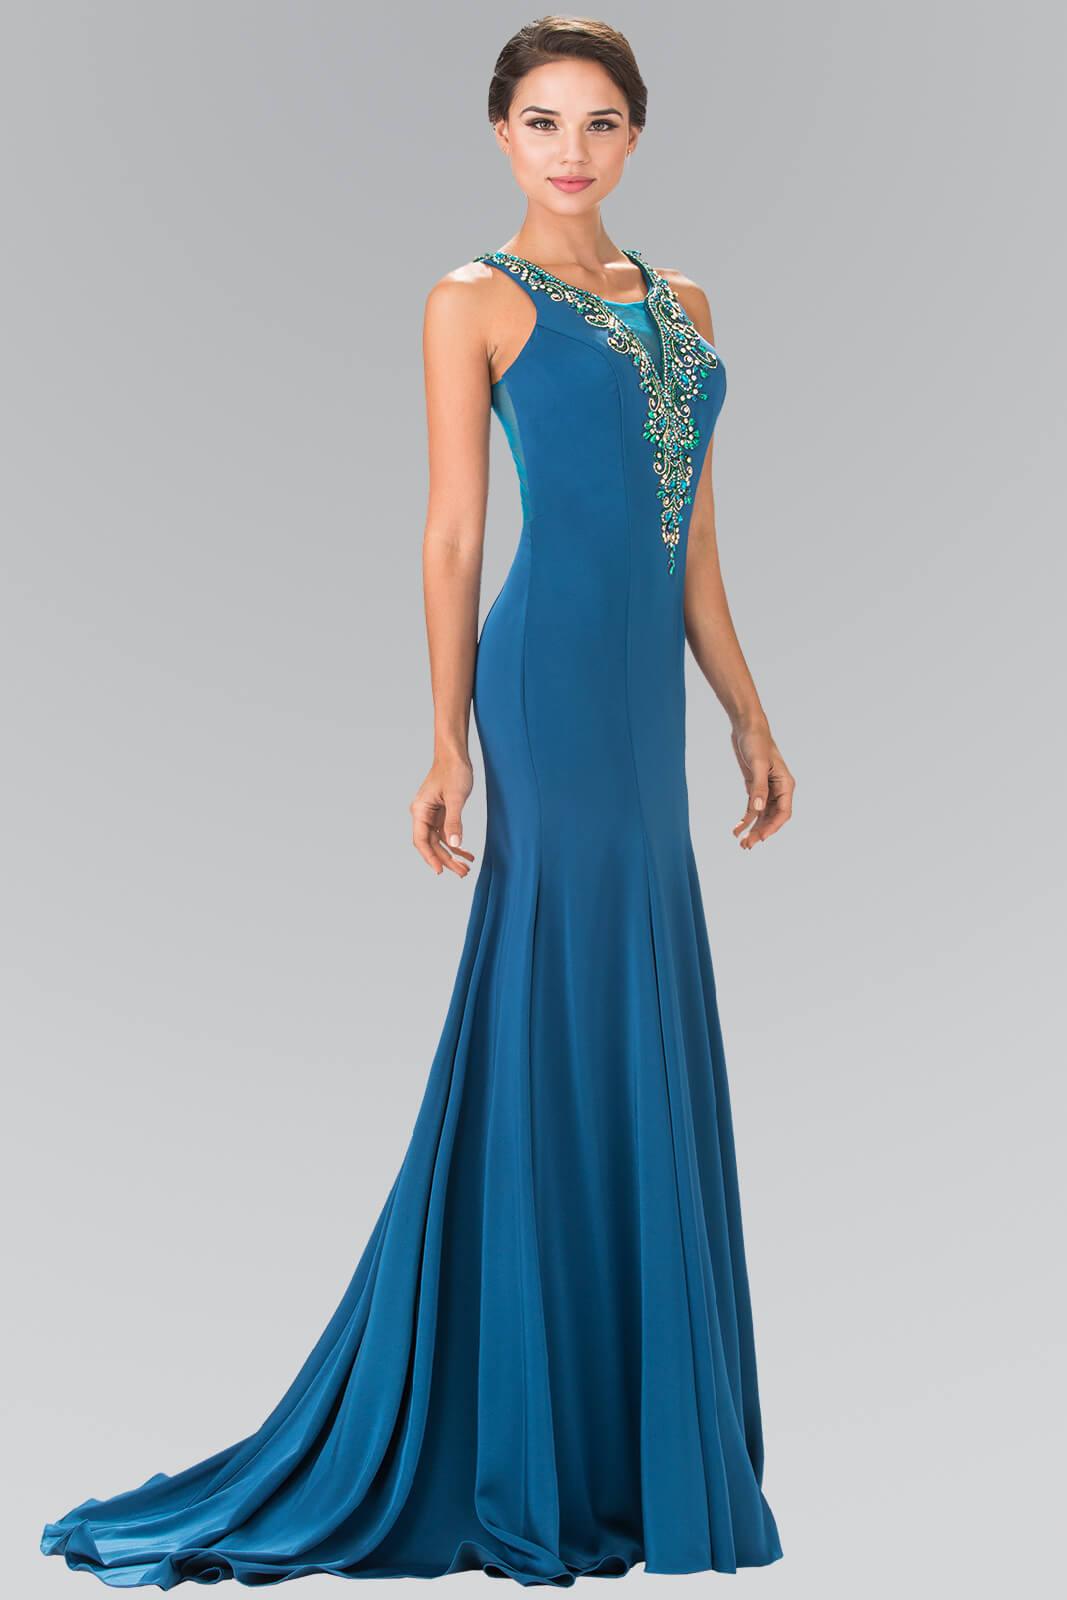 Long Sleeveless Formal Evening Prom Dress - The Dress Outlet Elizabeth K